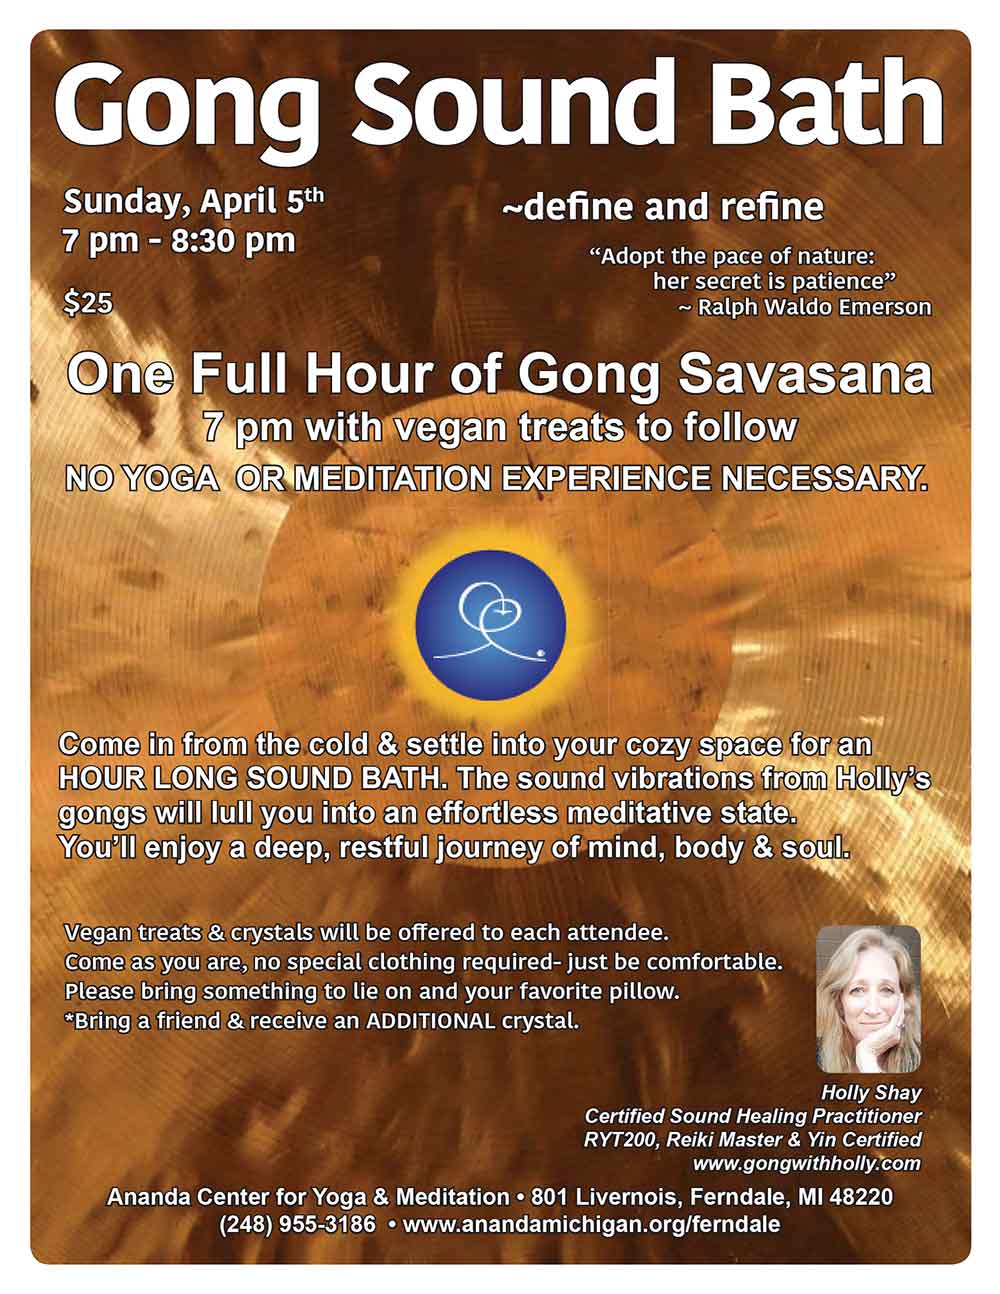 Gong Sound Bath ~define and refine - April 5th - 7pm - 8:30pm - $25 - Ananda Center for Yoga & Meditation, Ferndale, MI